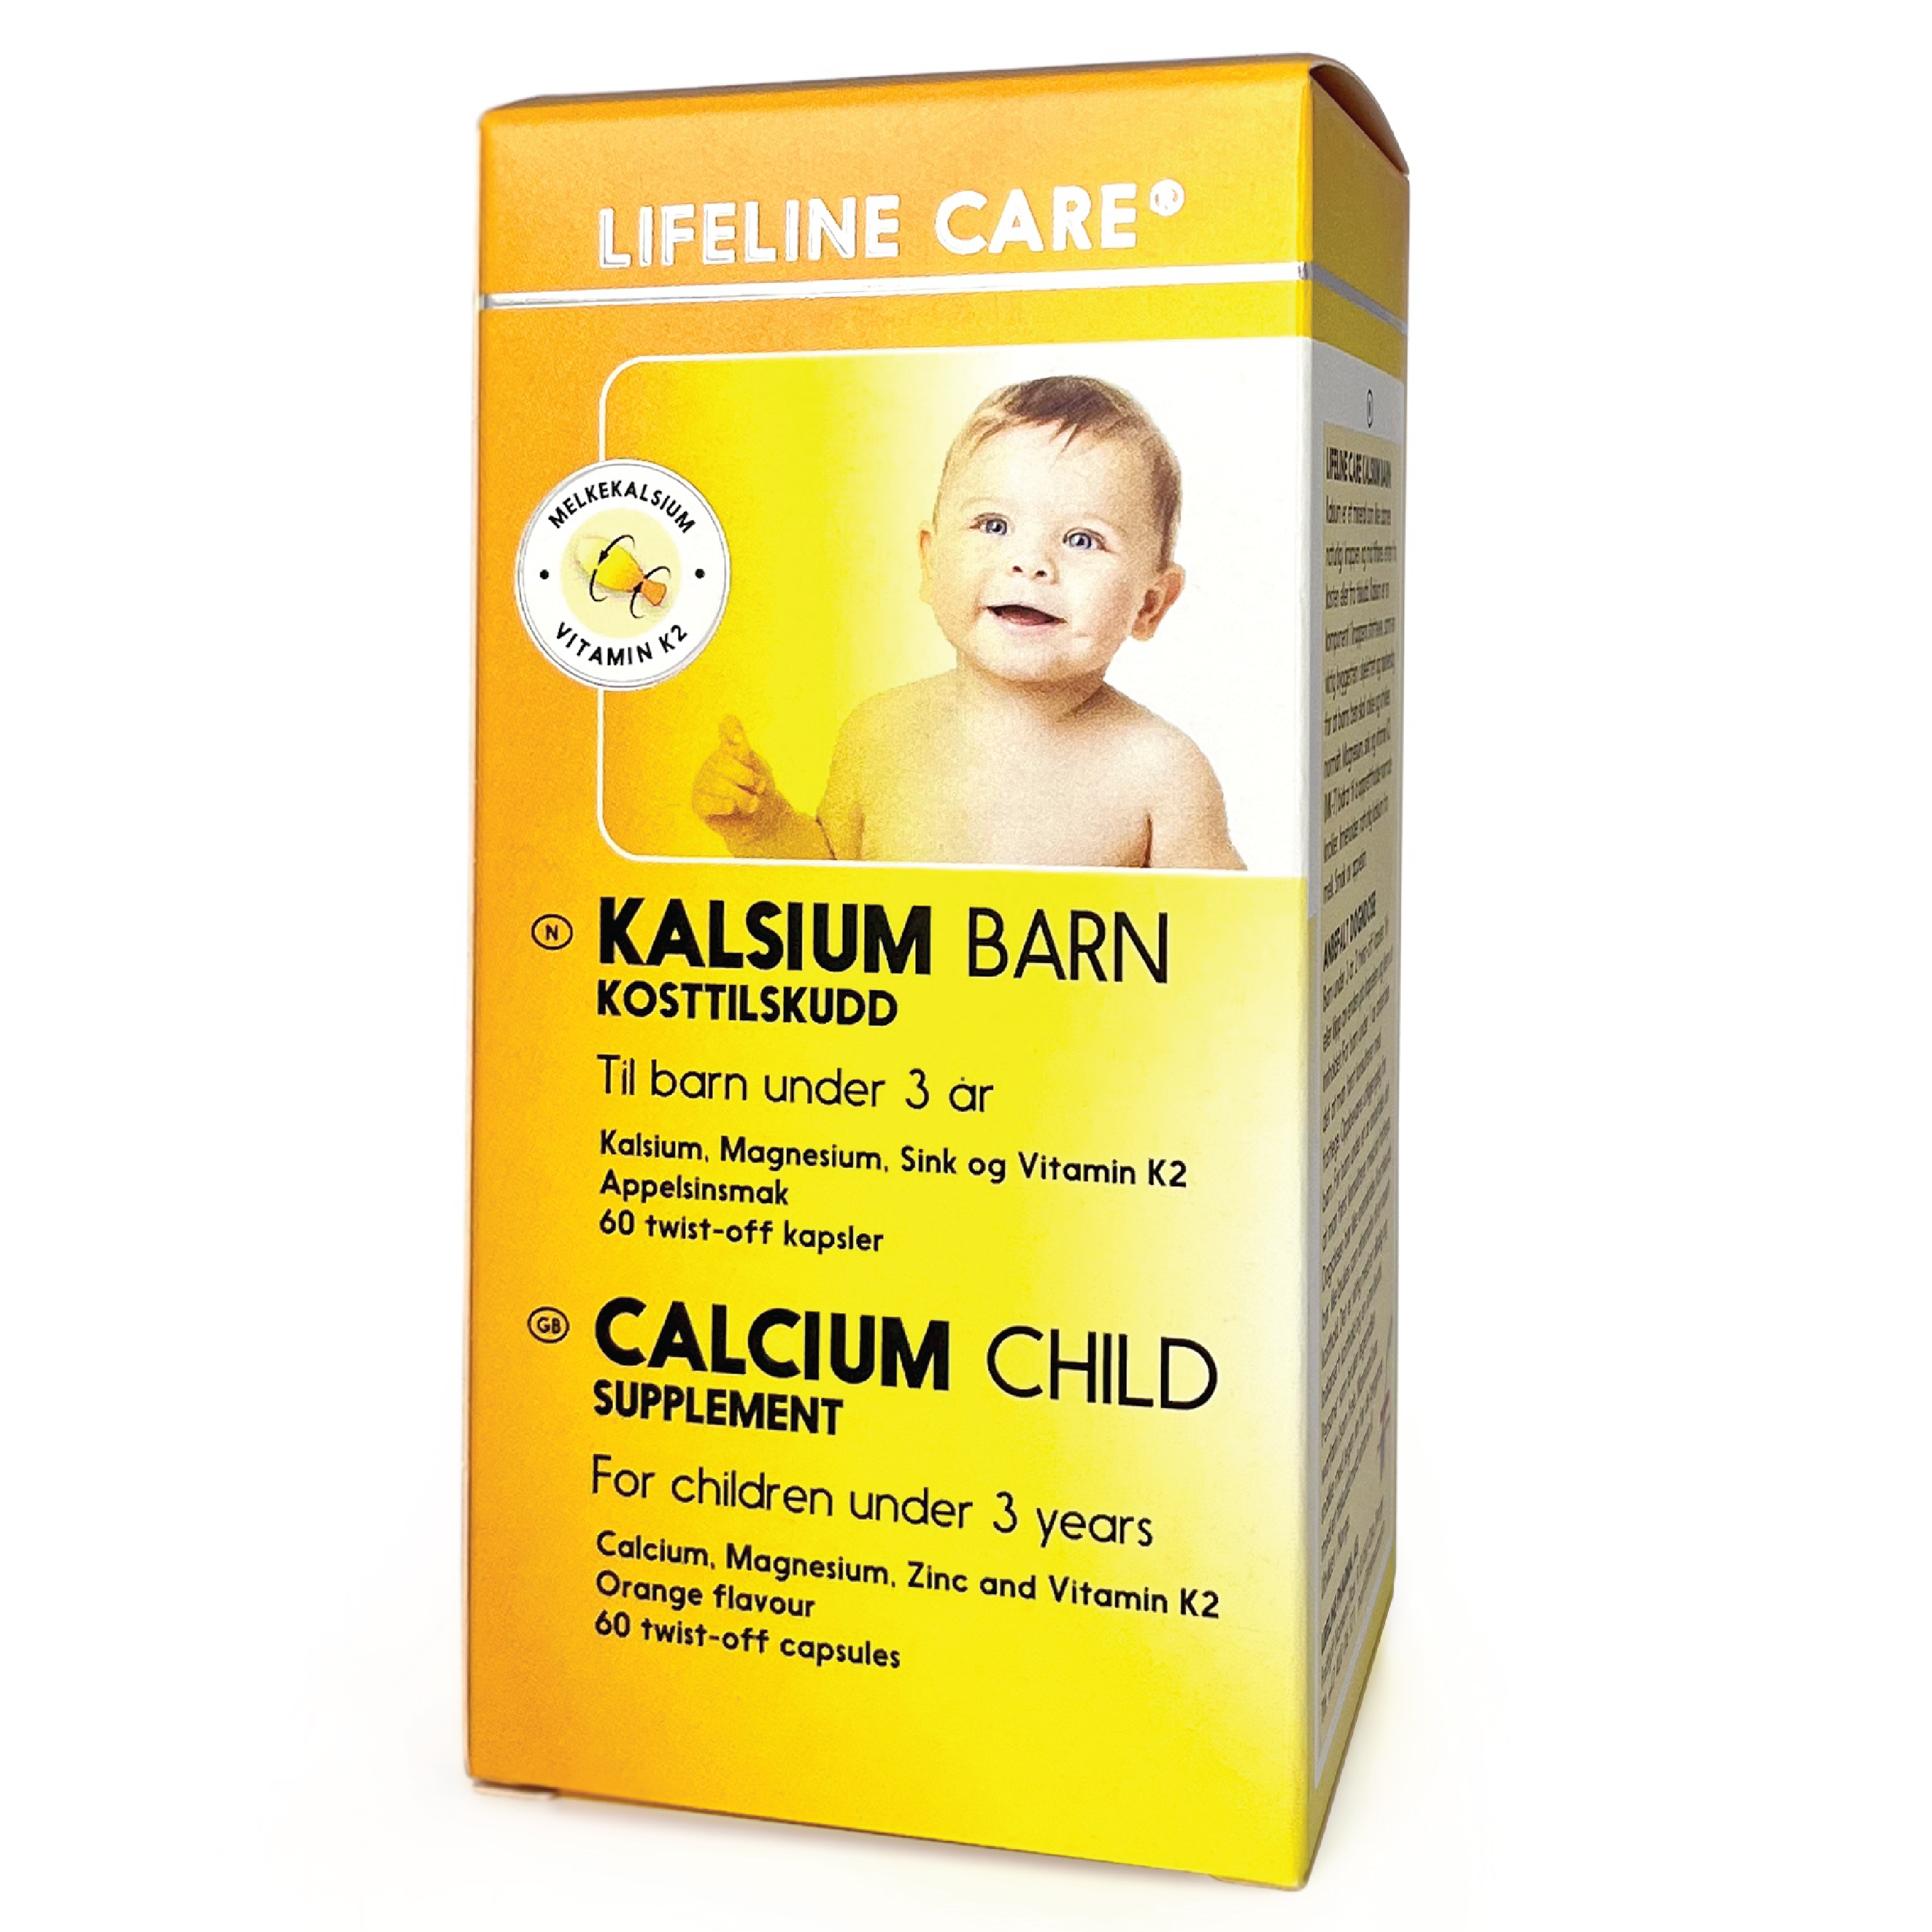 Lifeline Care Kalsium Barn, 60 kapsler